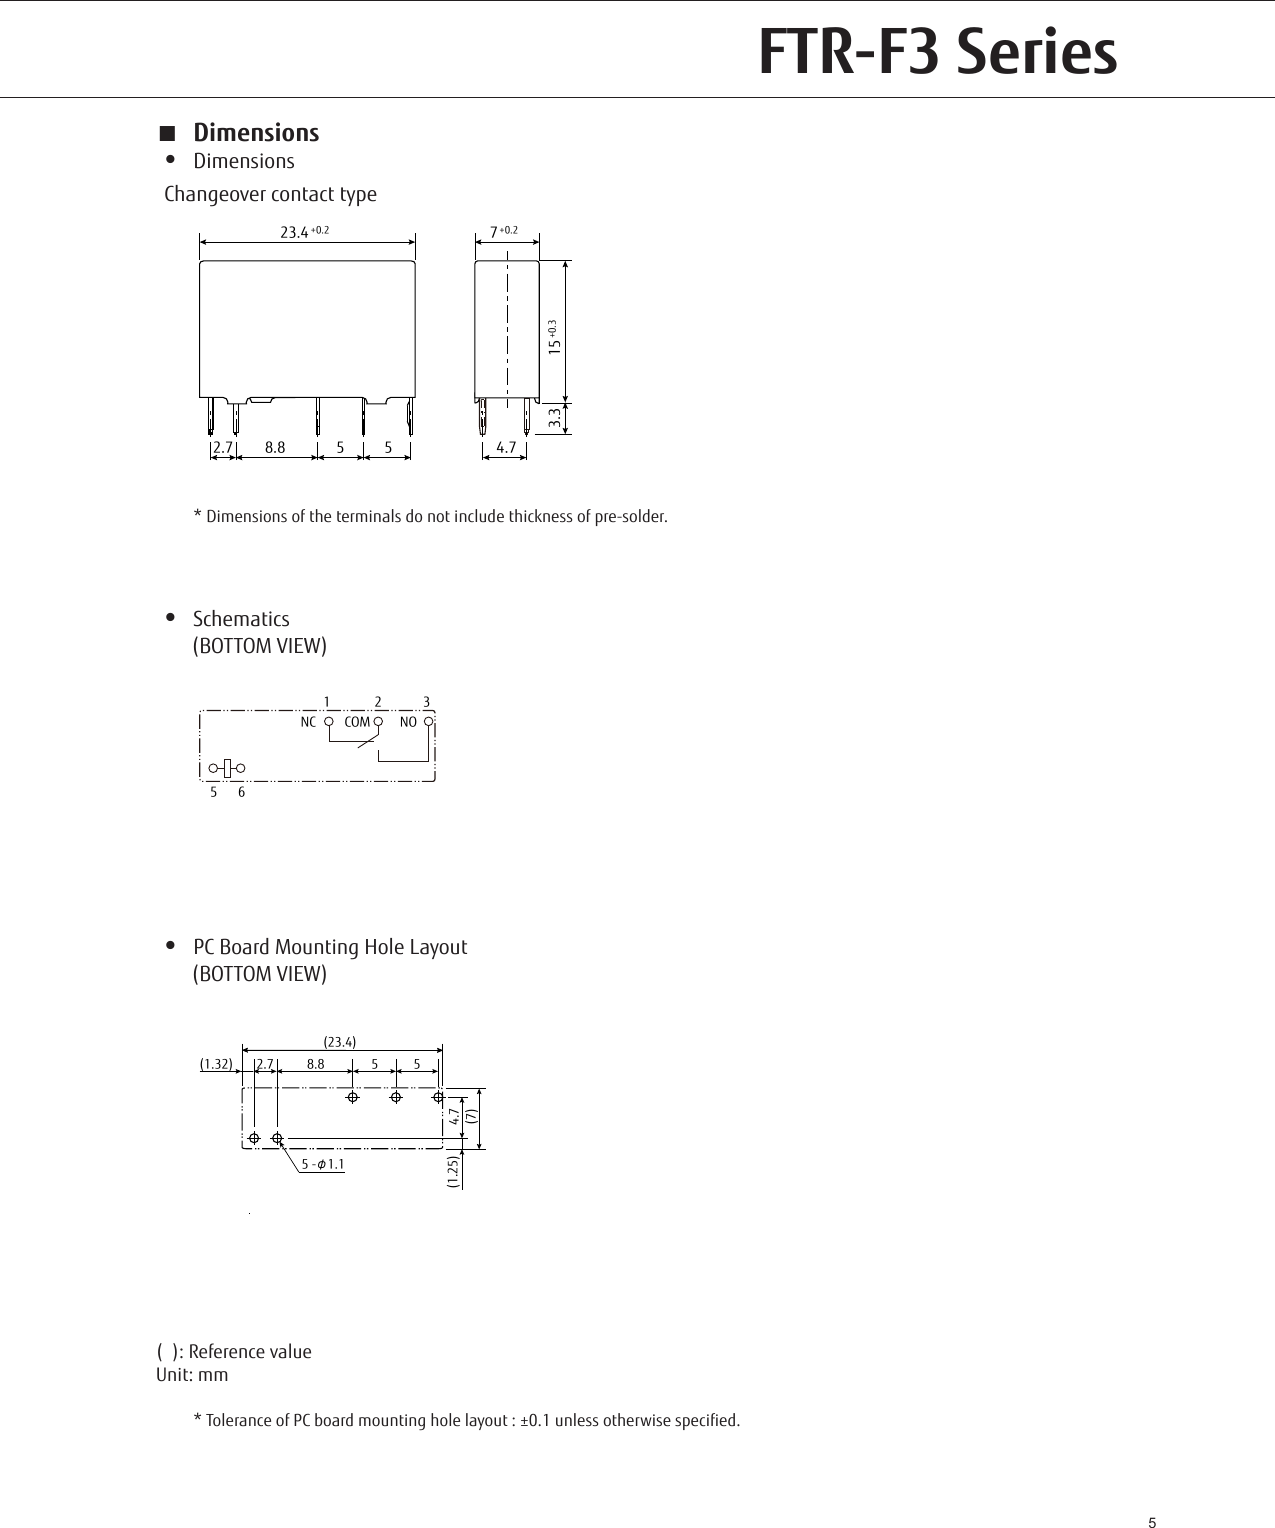 Page 5 of 7 - Fujitsu  FTR-F3 (5A 1 Form C) Ftr-f3-cc